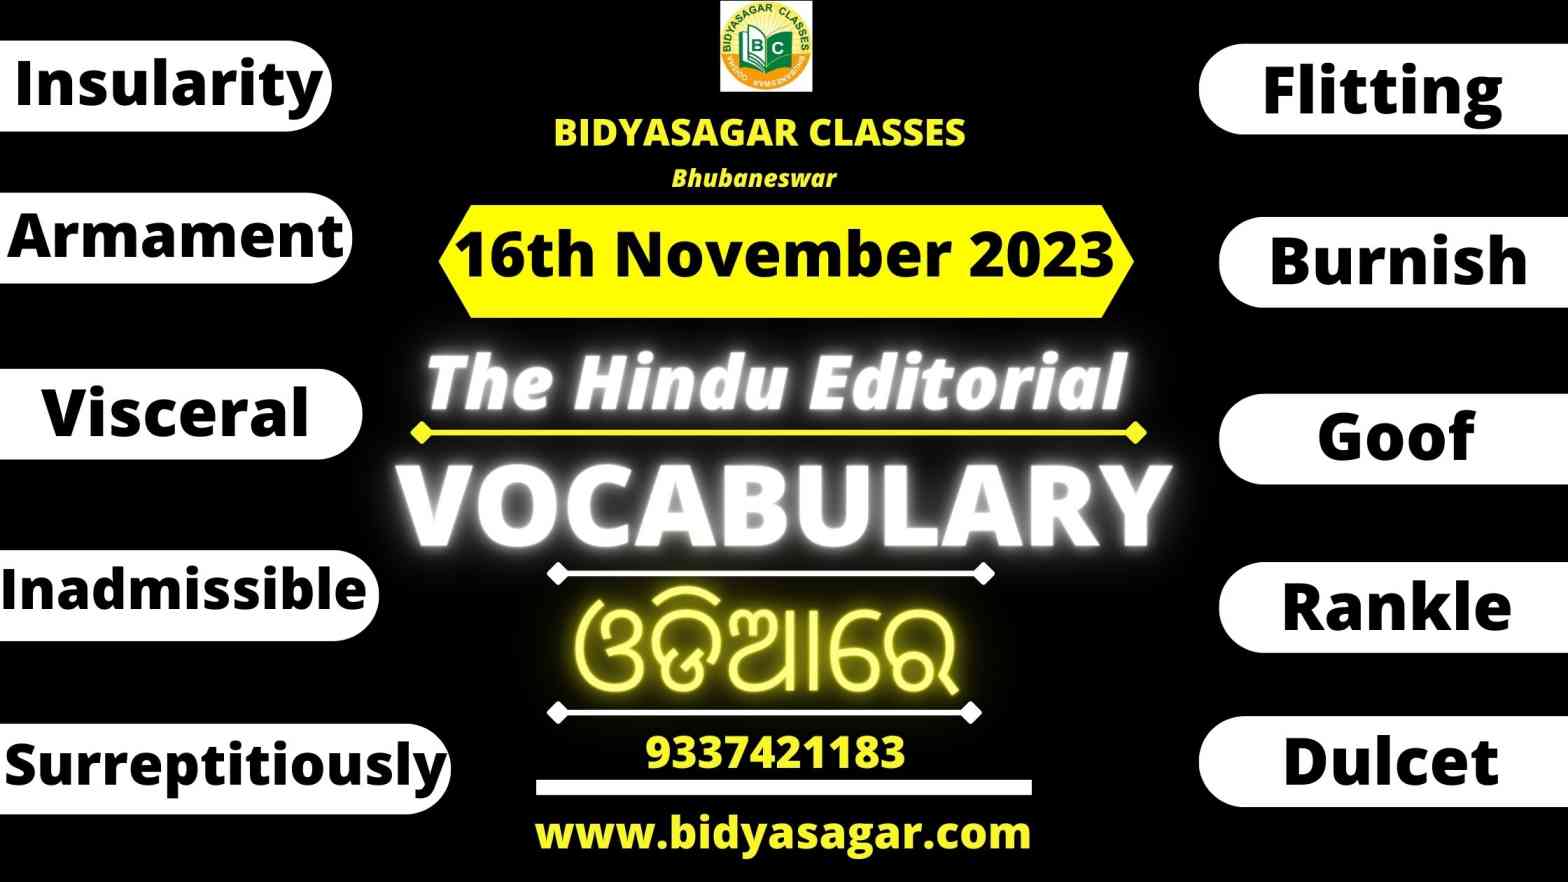 The Hindu Editorial Vocabulary of 16th November 2023